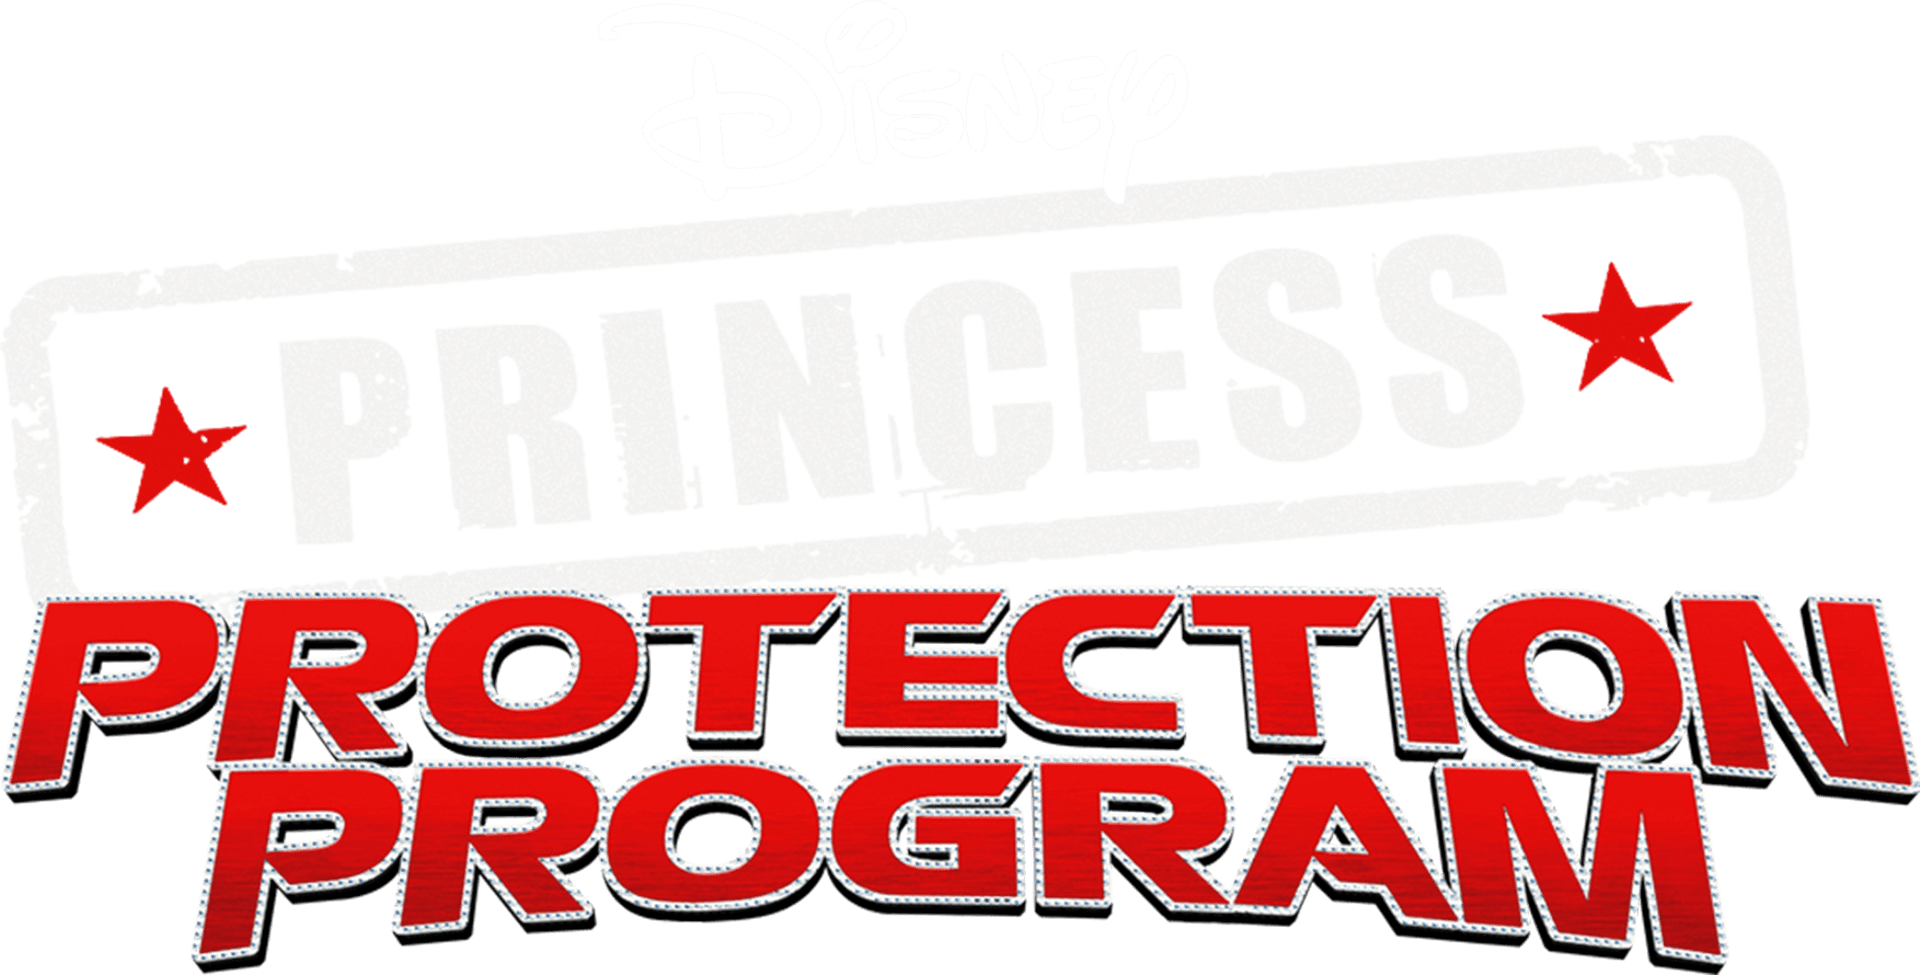 Princess Protection Program logo